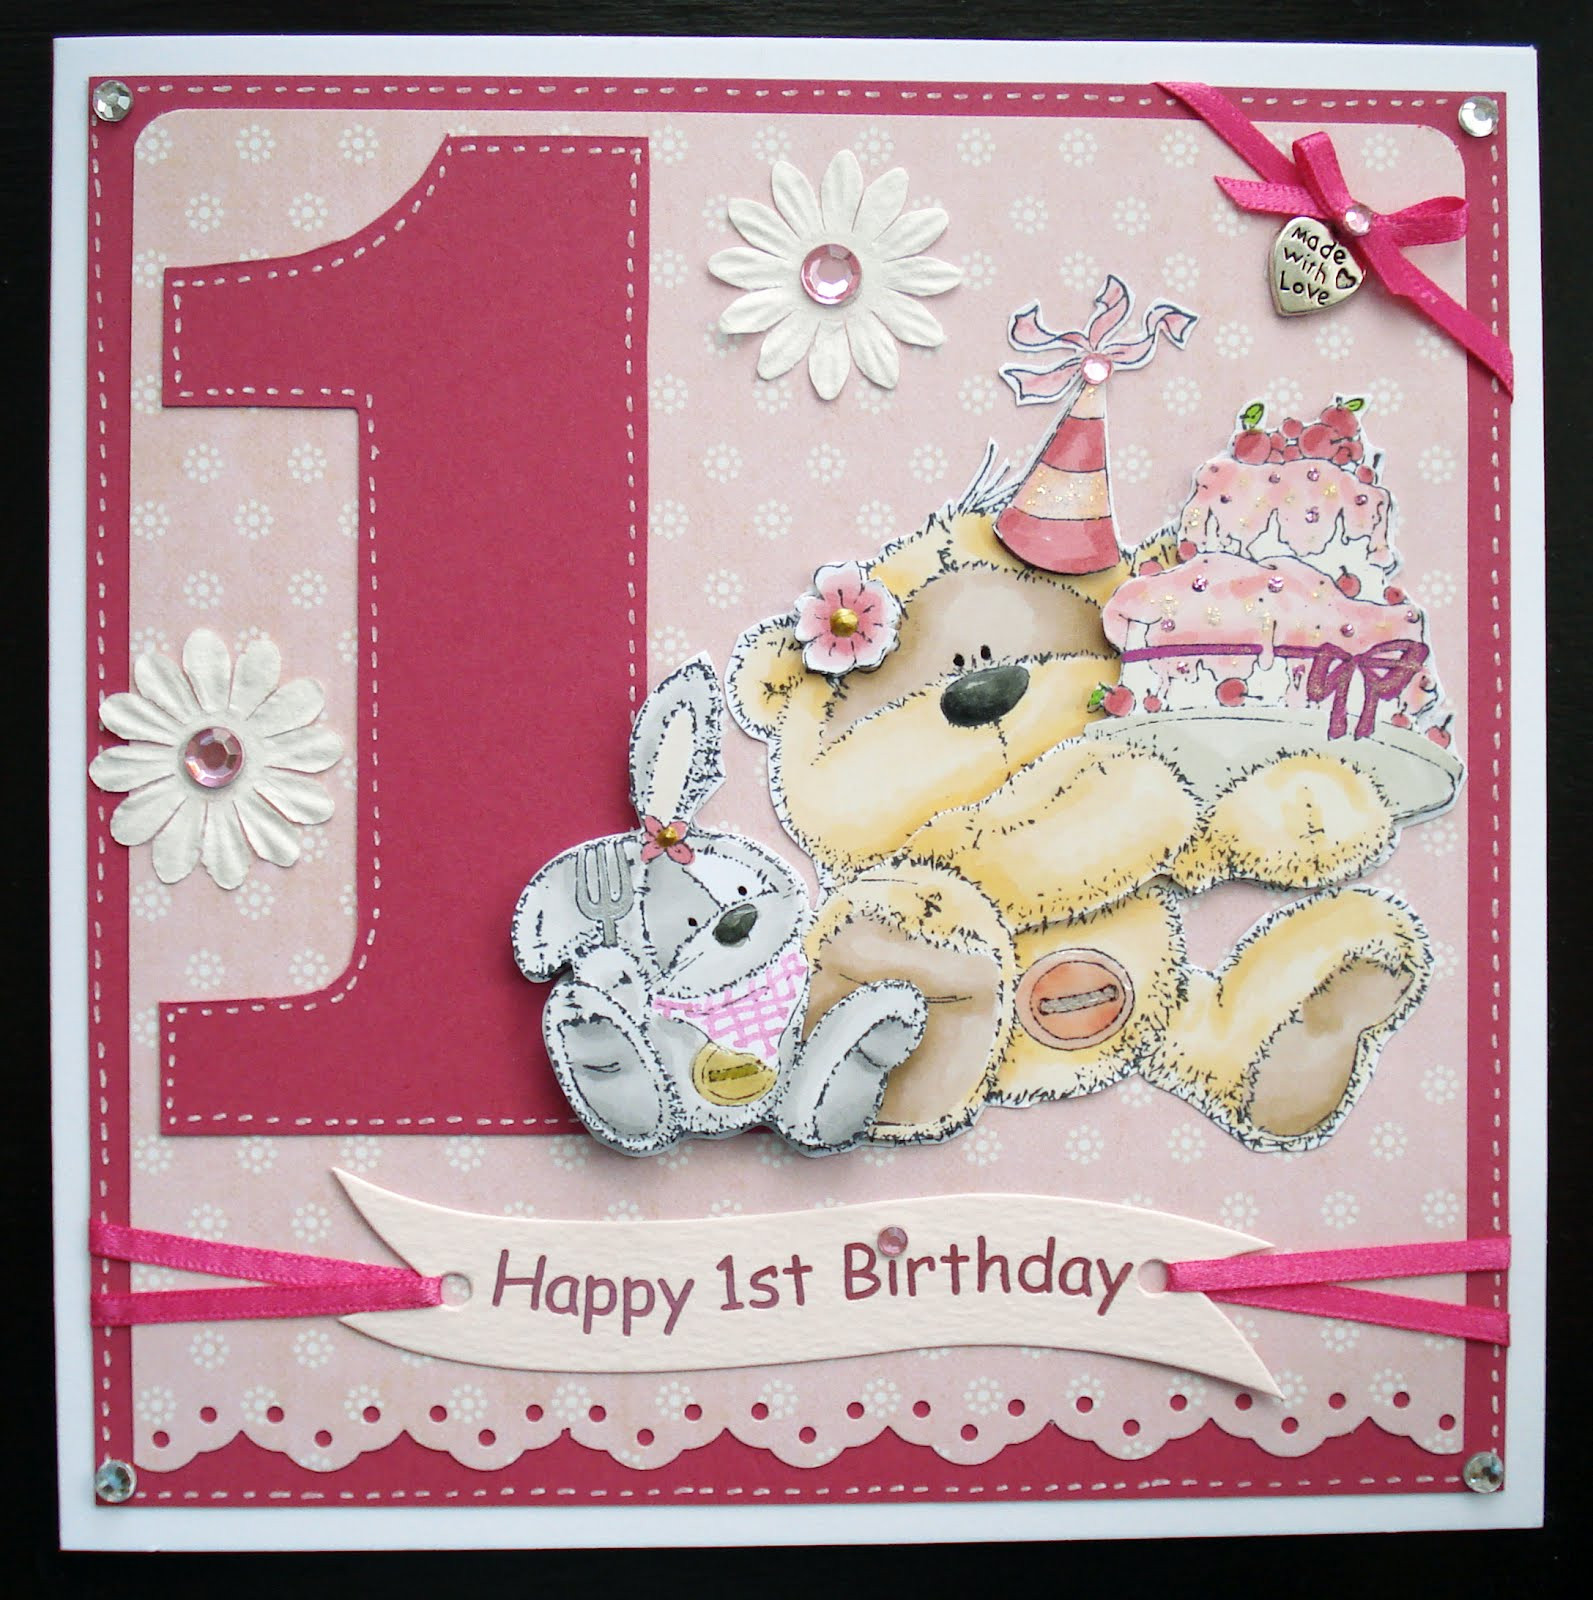 Best ideas about 1st Birthday Card
. Save or Pin kaardvark Megan s first birthday Now.